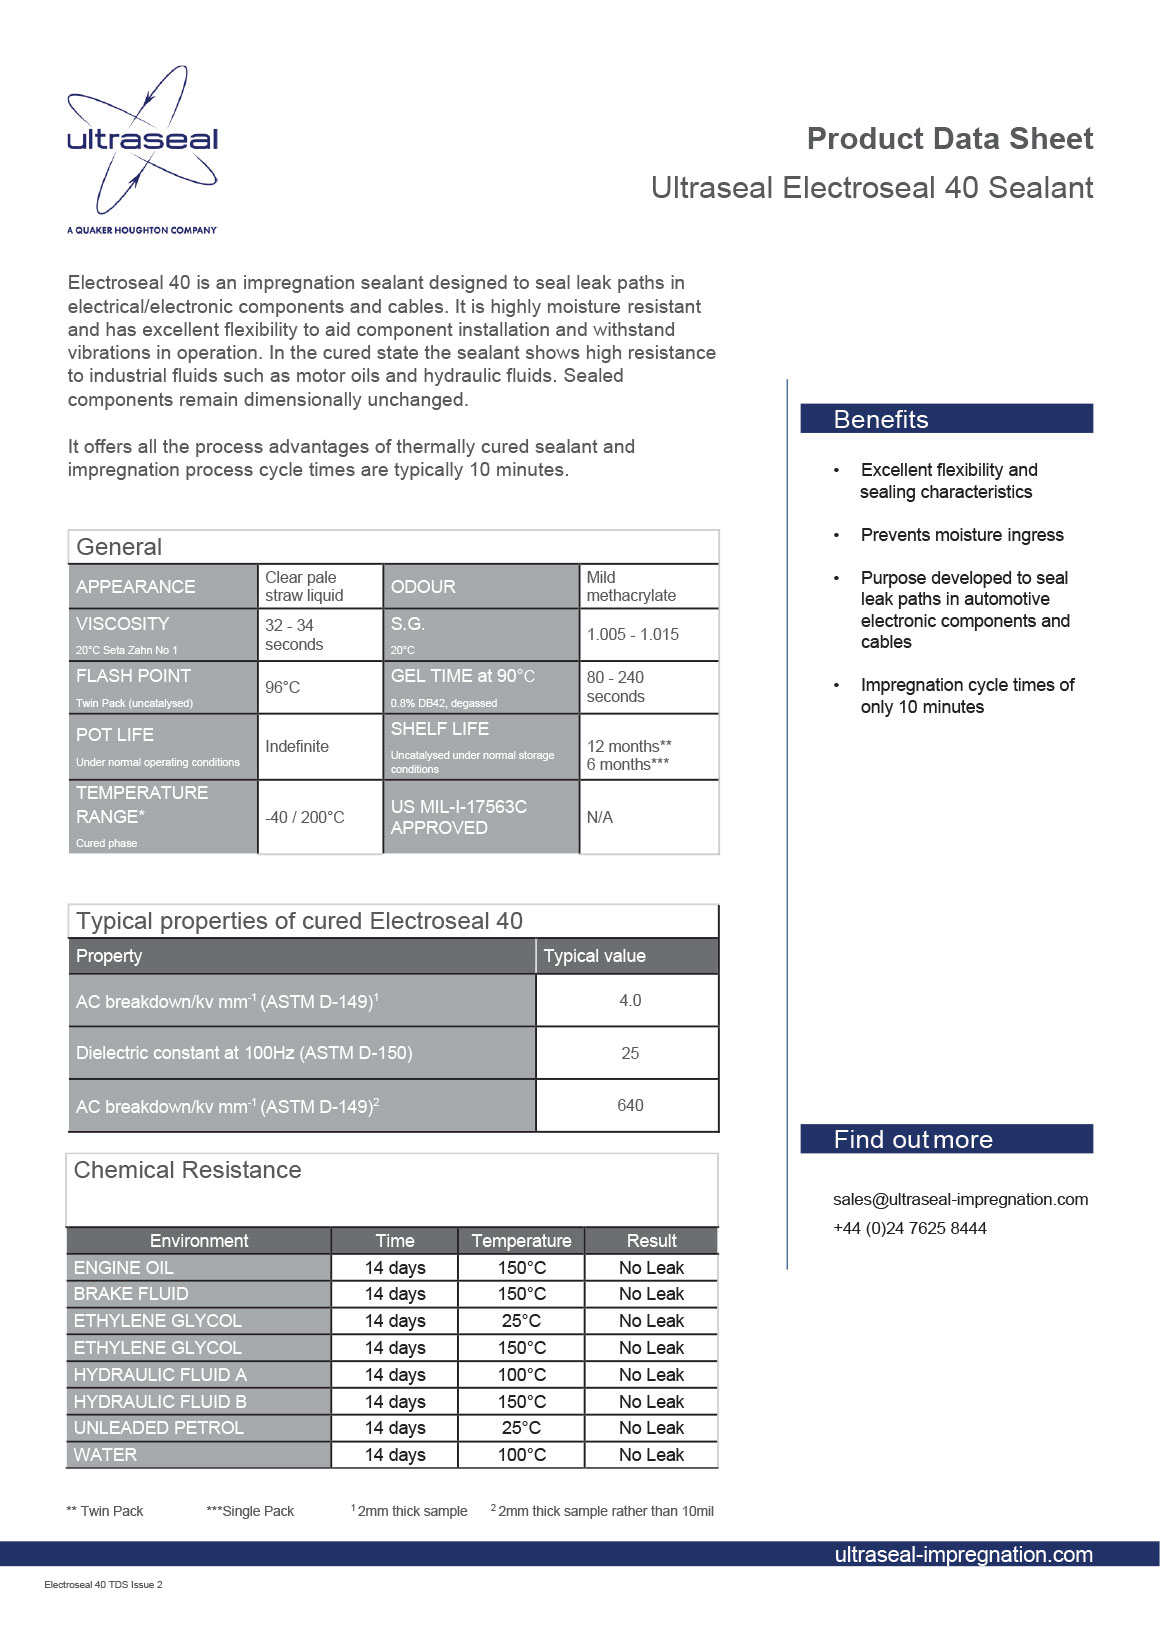 Electroseal Data Sheet - whitepaper cover